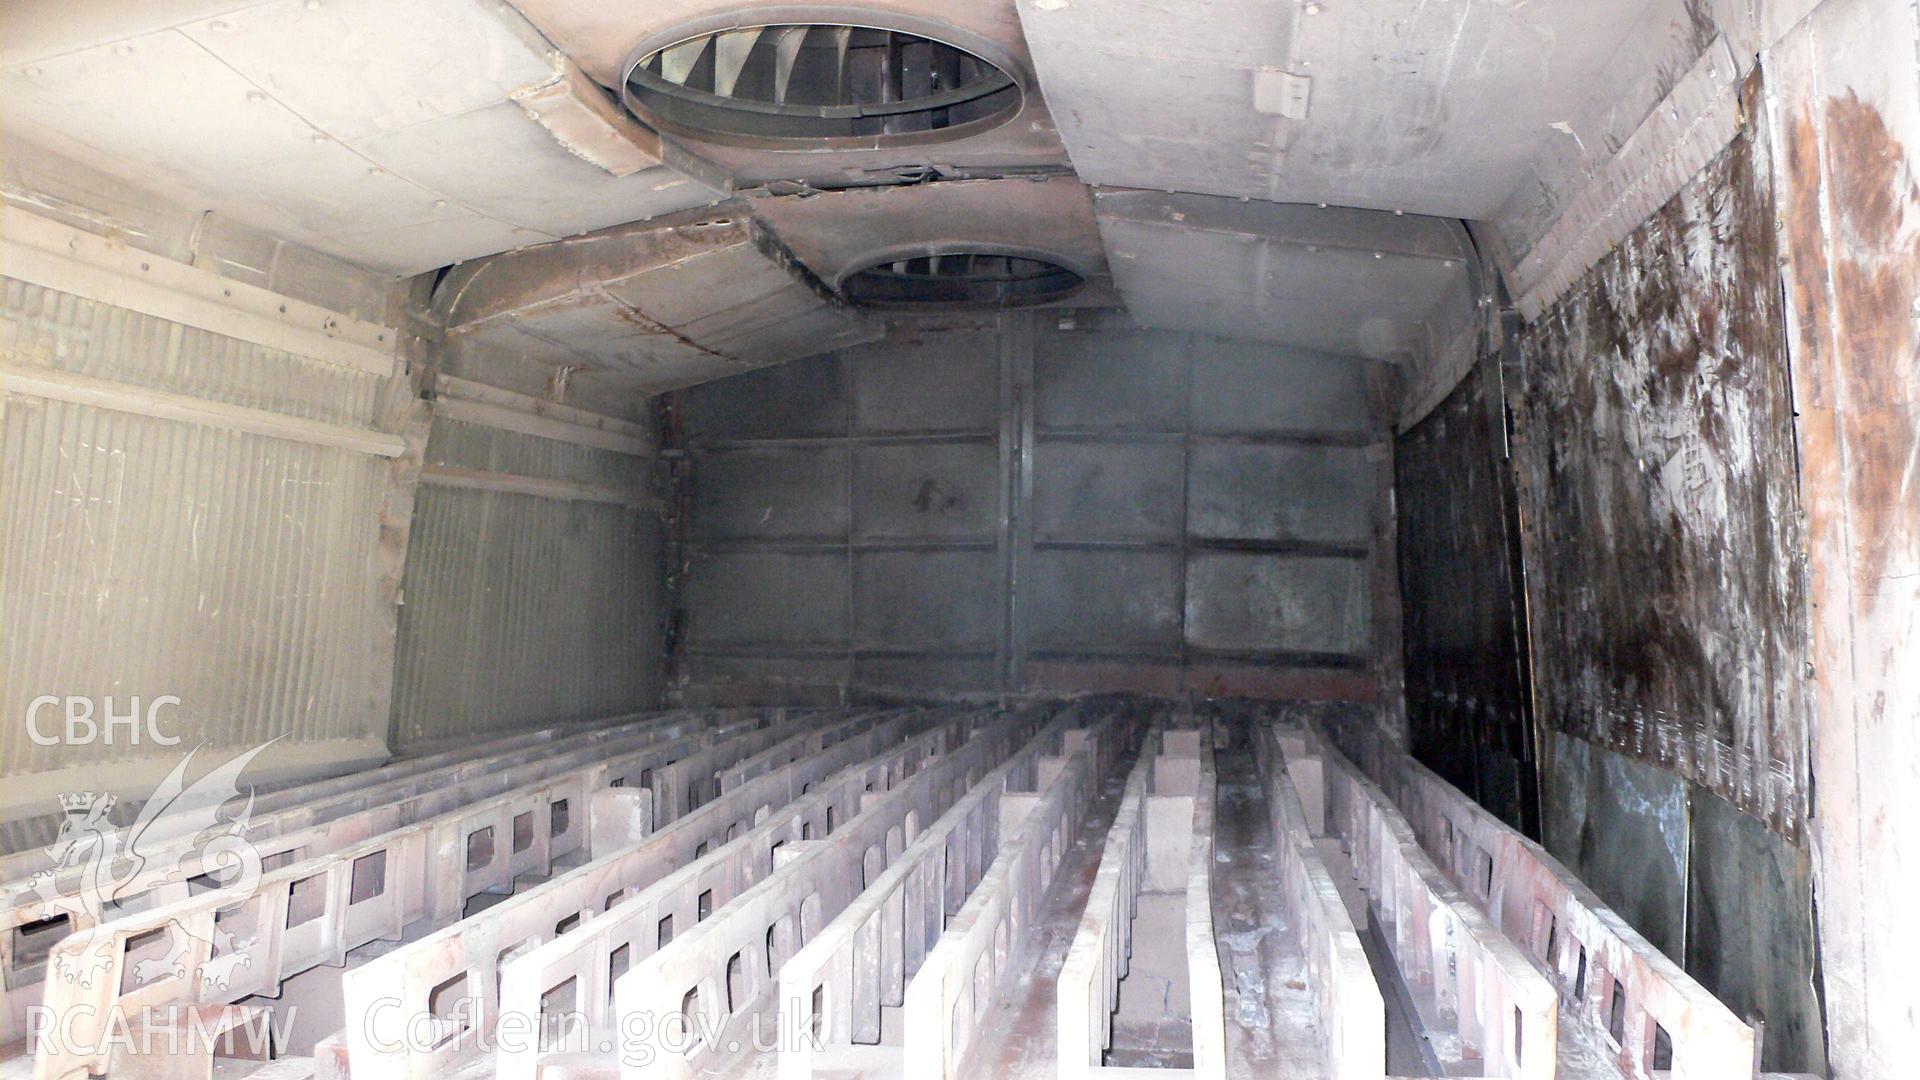 Interior of large oven at at Dolgarrog Aluminium Works taken by Ken Howarth 2008